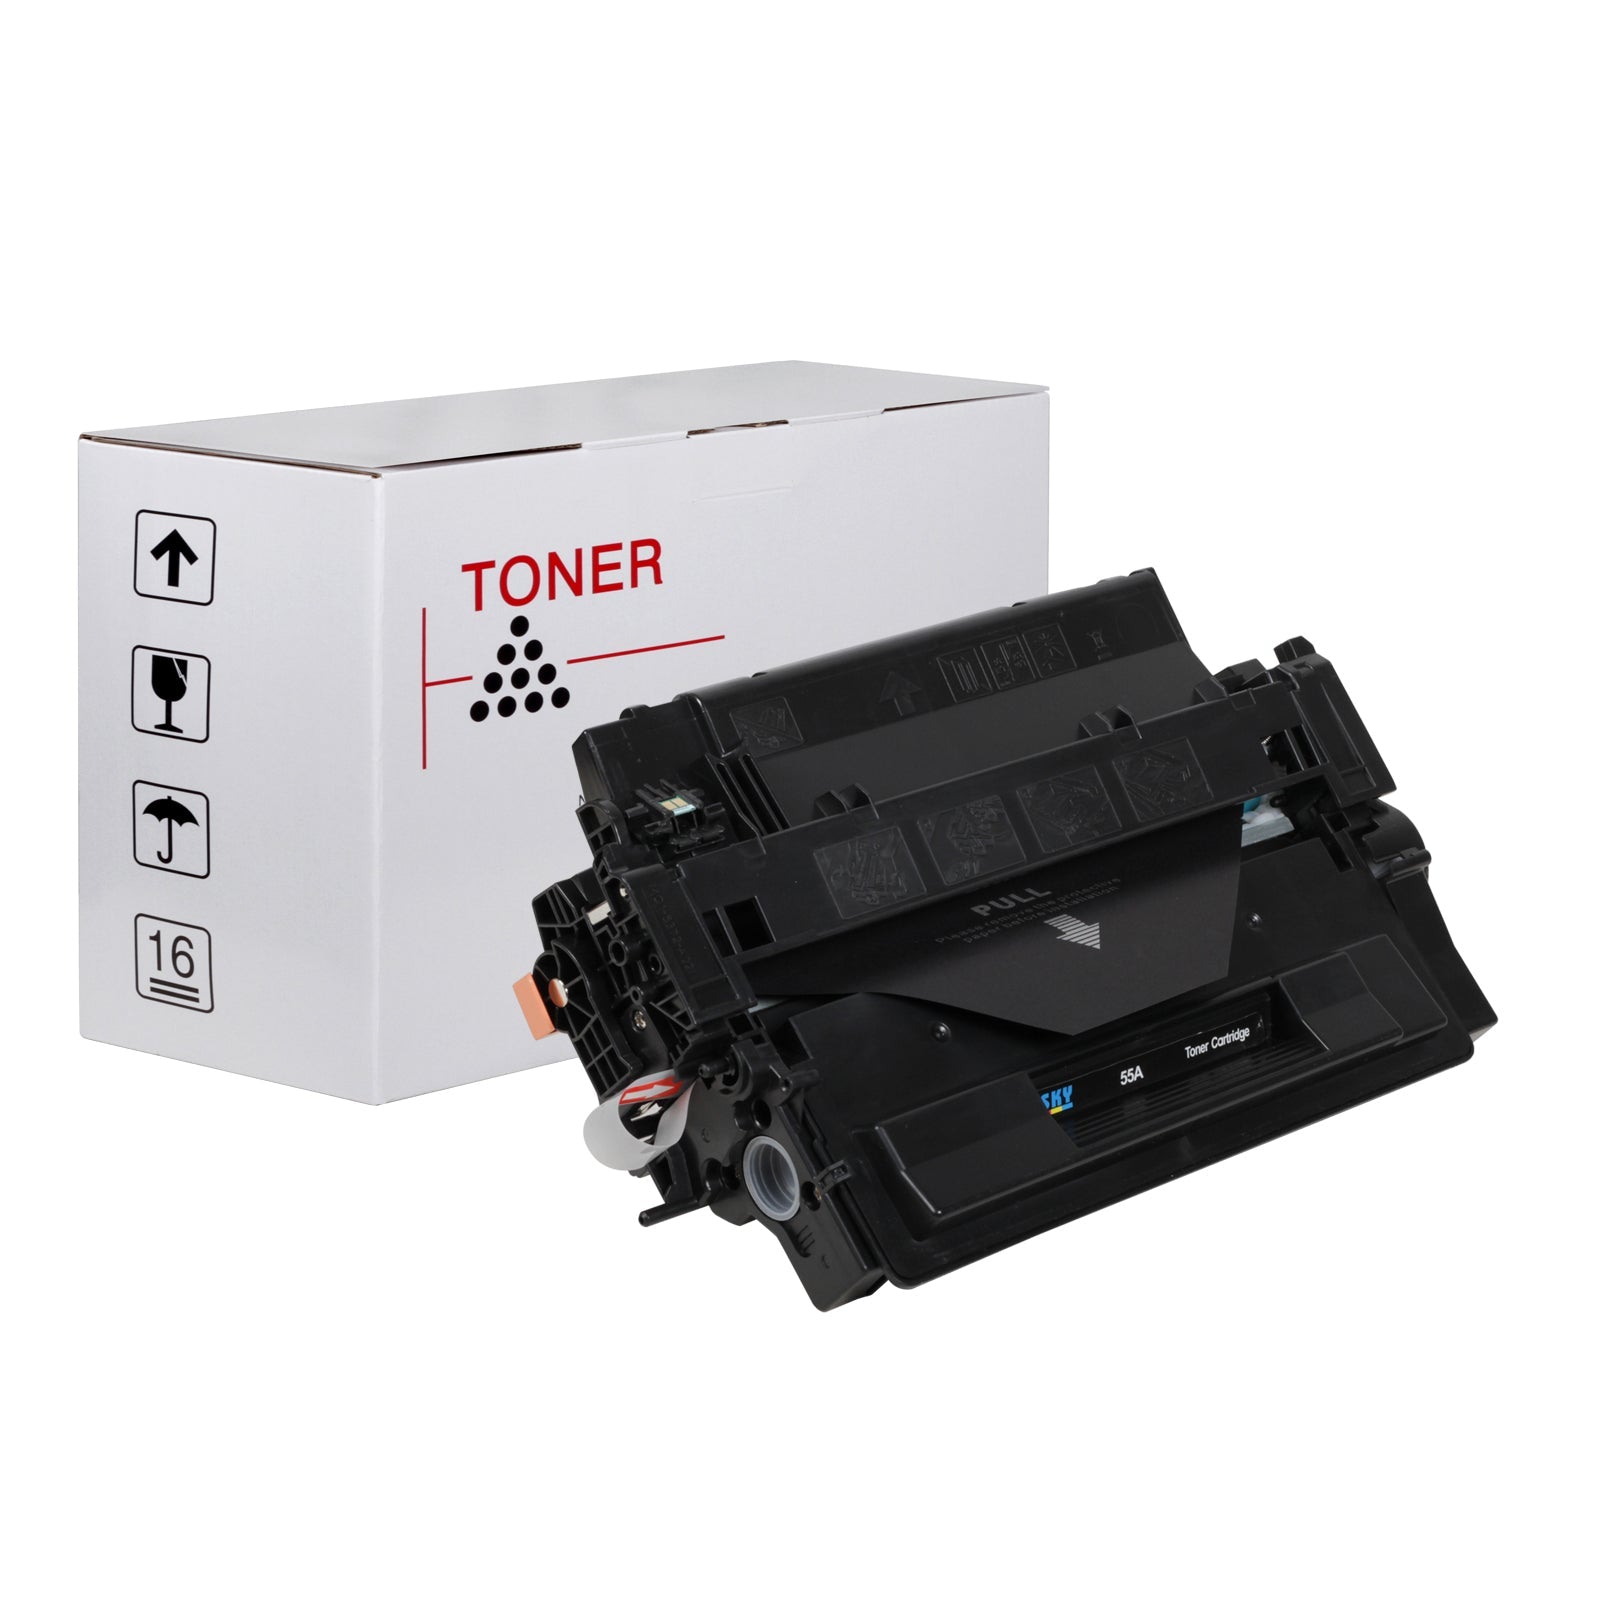 SKY 724 Toner Cartridge  for   i-SENSYS LBP6750dn